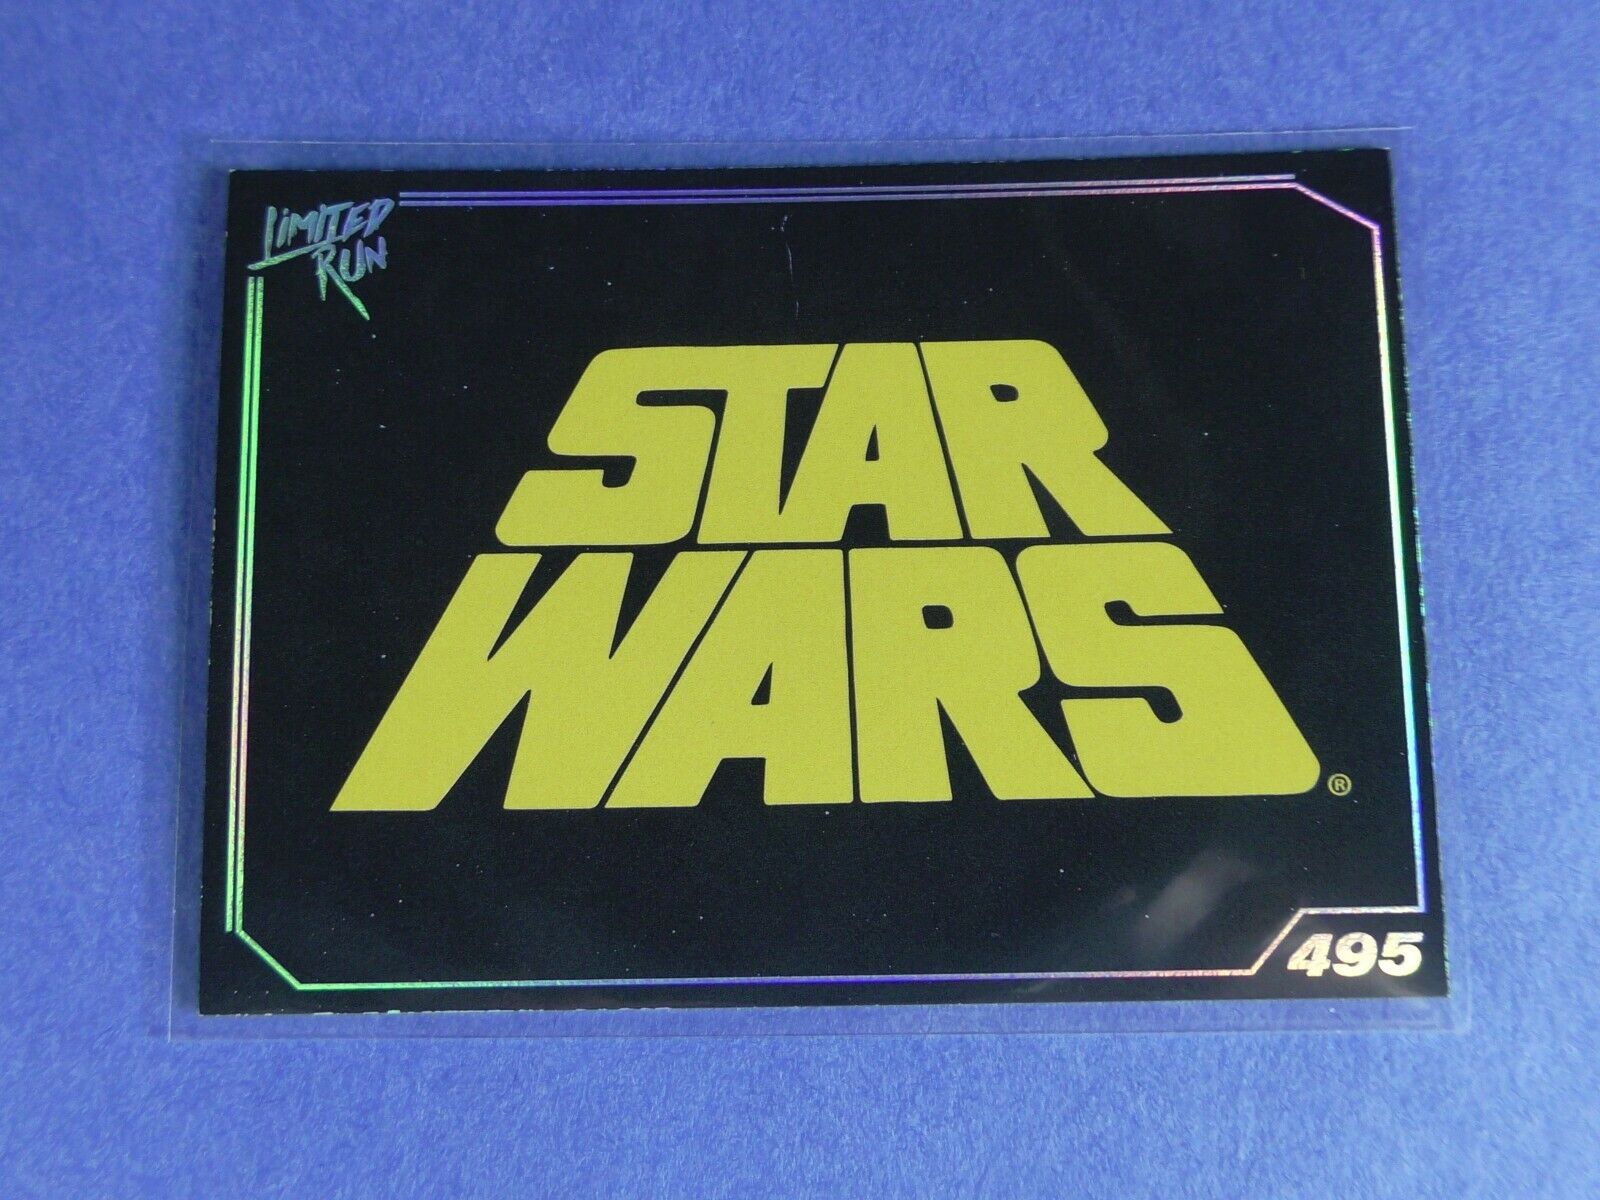 Limited Run Games Star Wars trading card silver 495 LRG